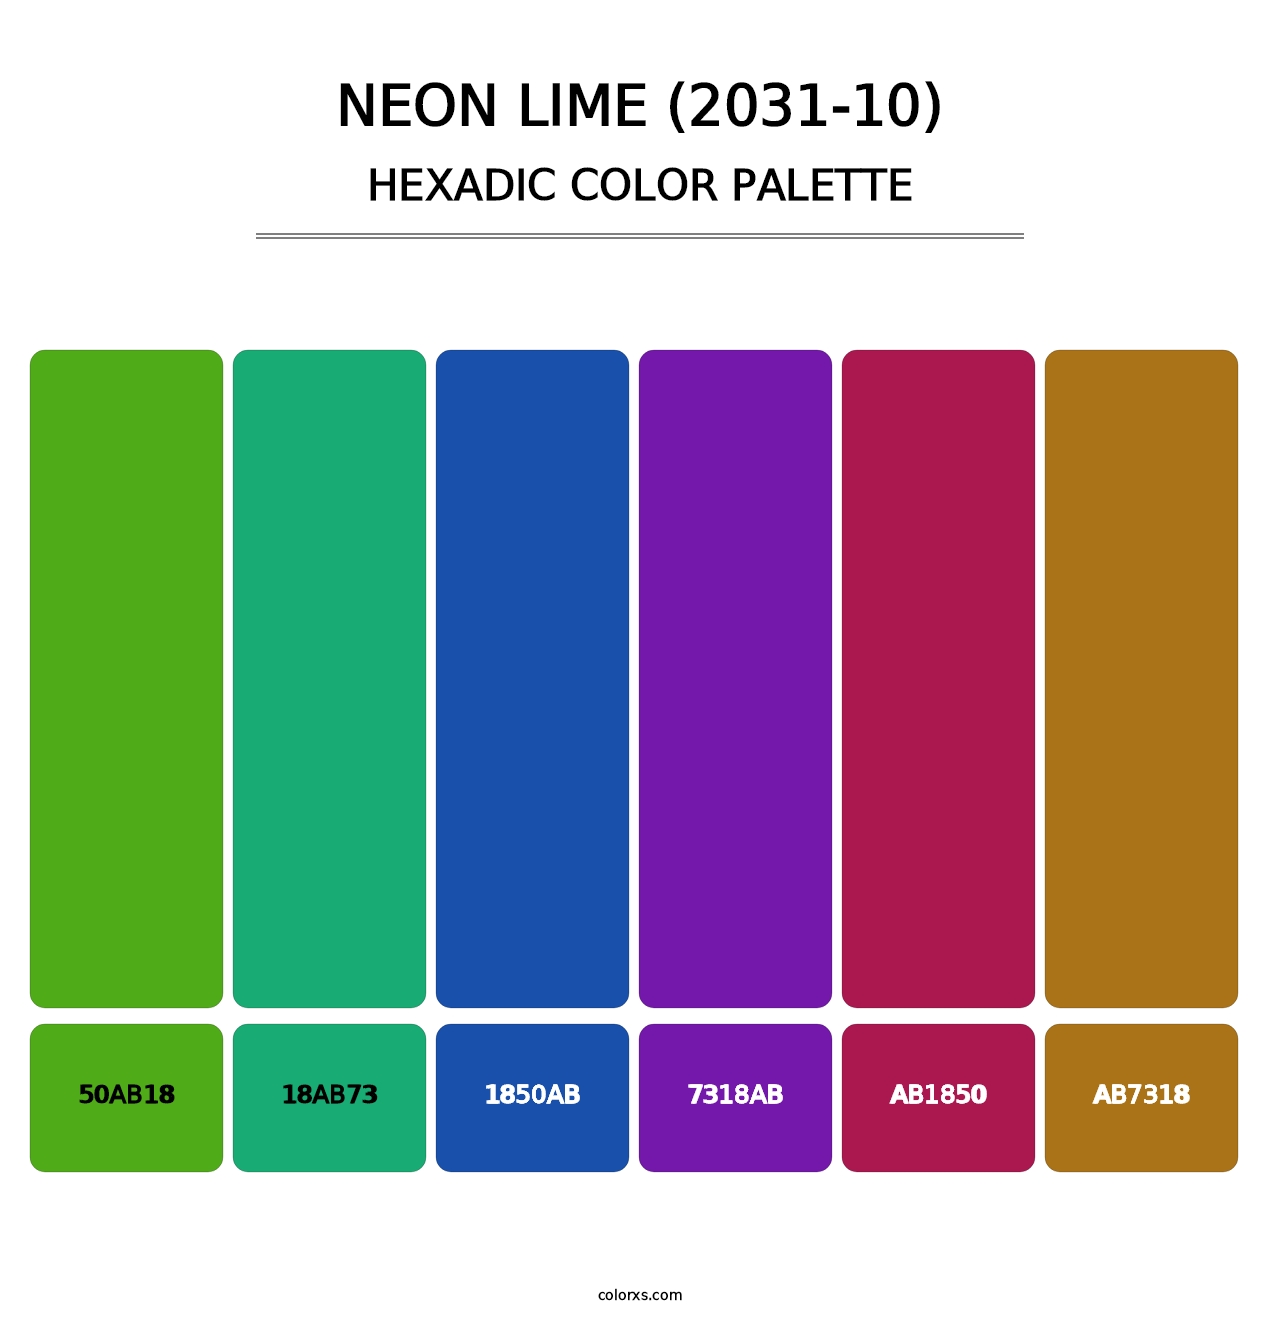 Neon Lime (2031-10) - Hexadic Color Palette